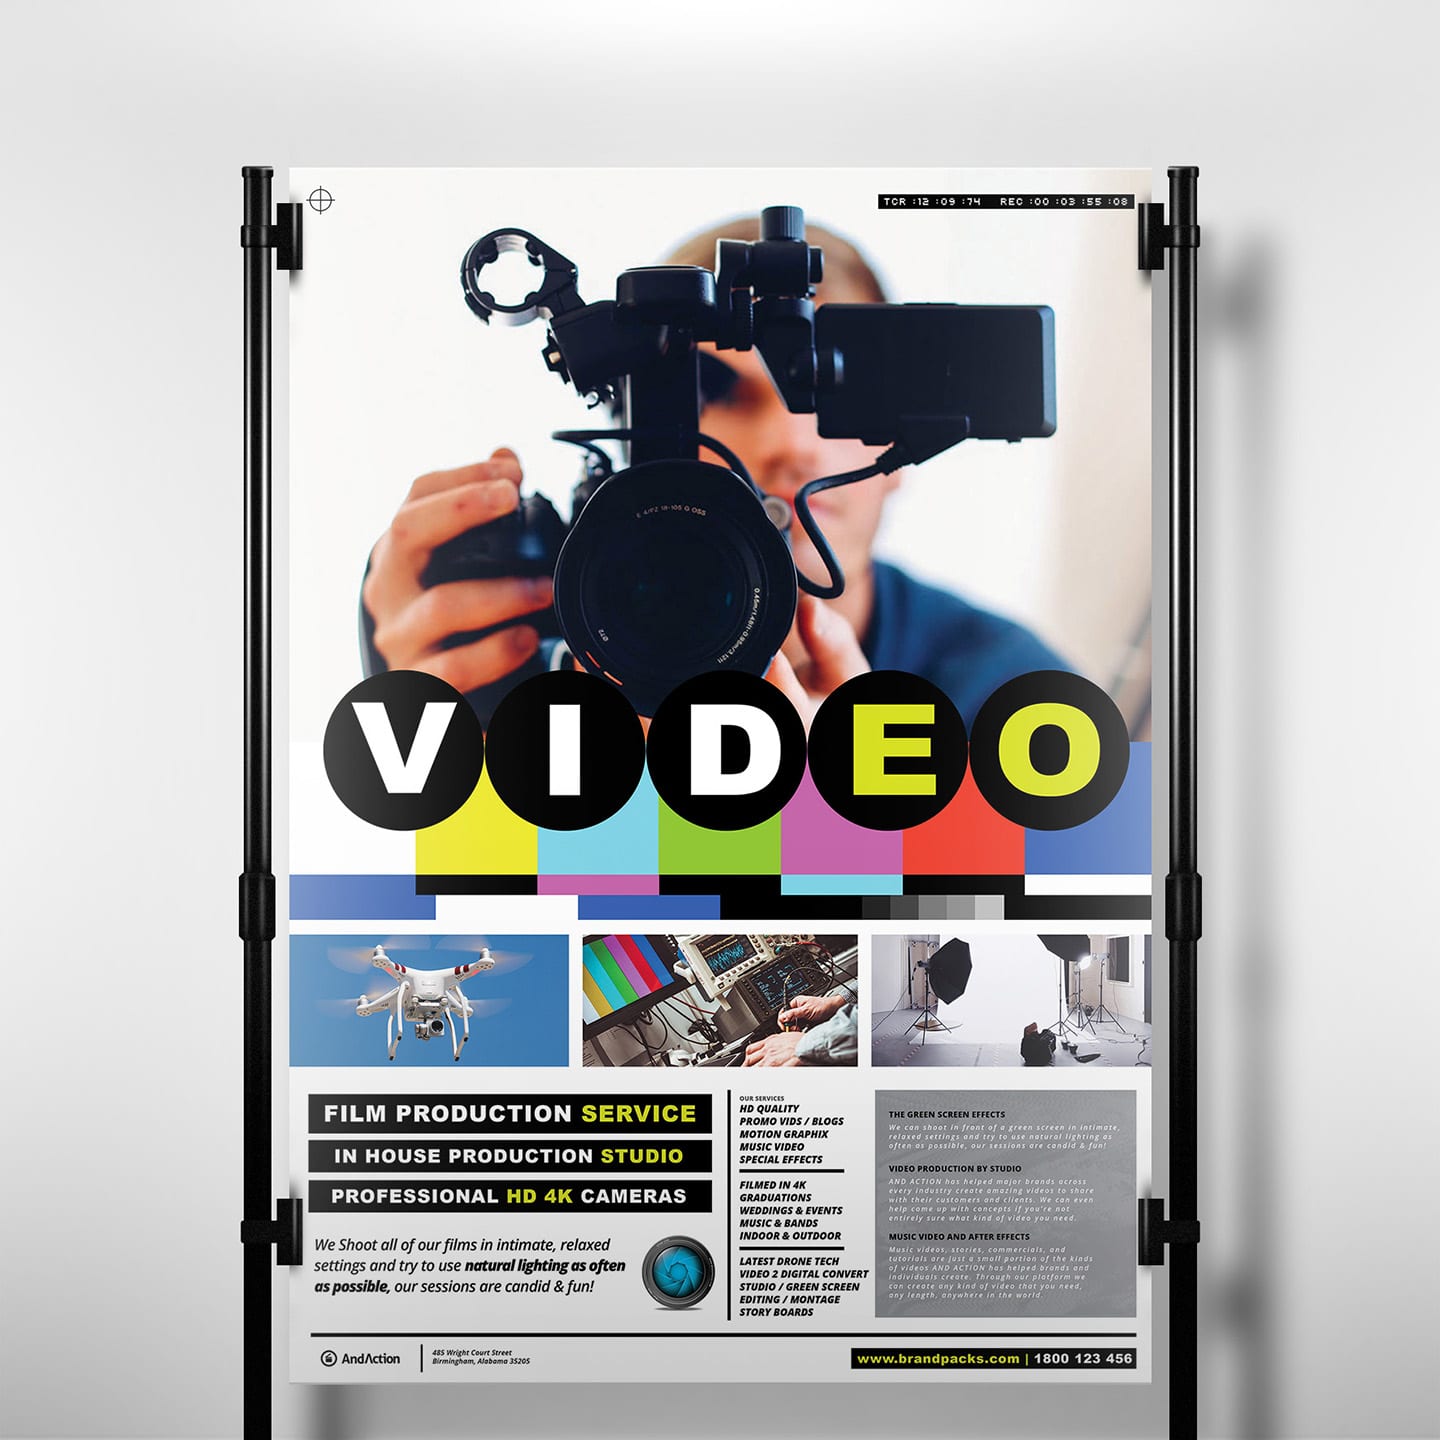 presentation for videography